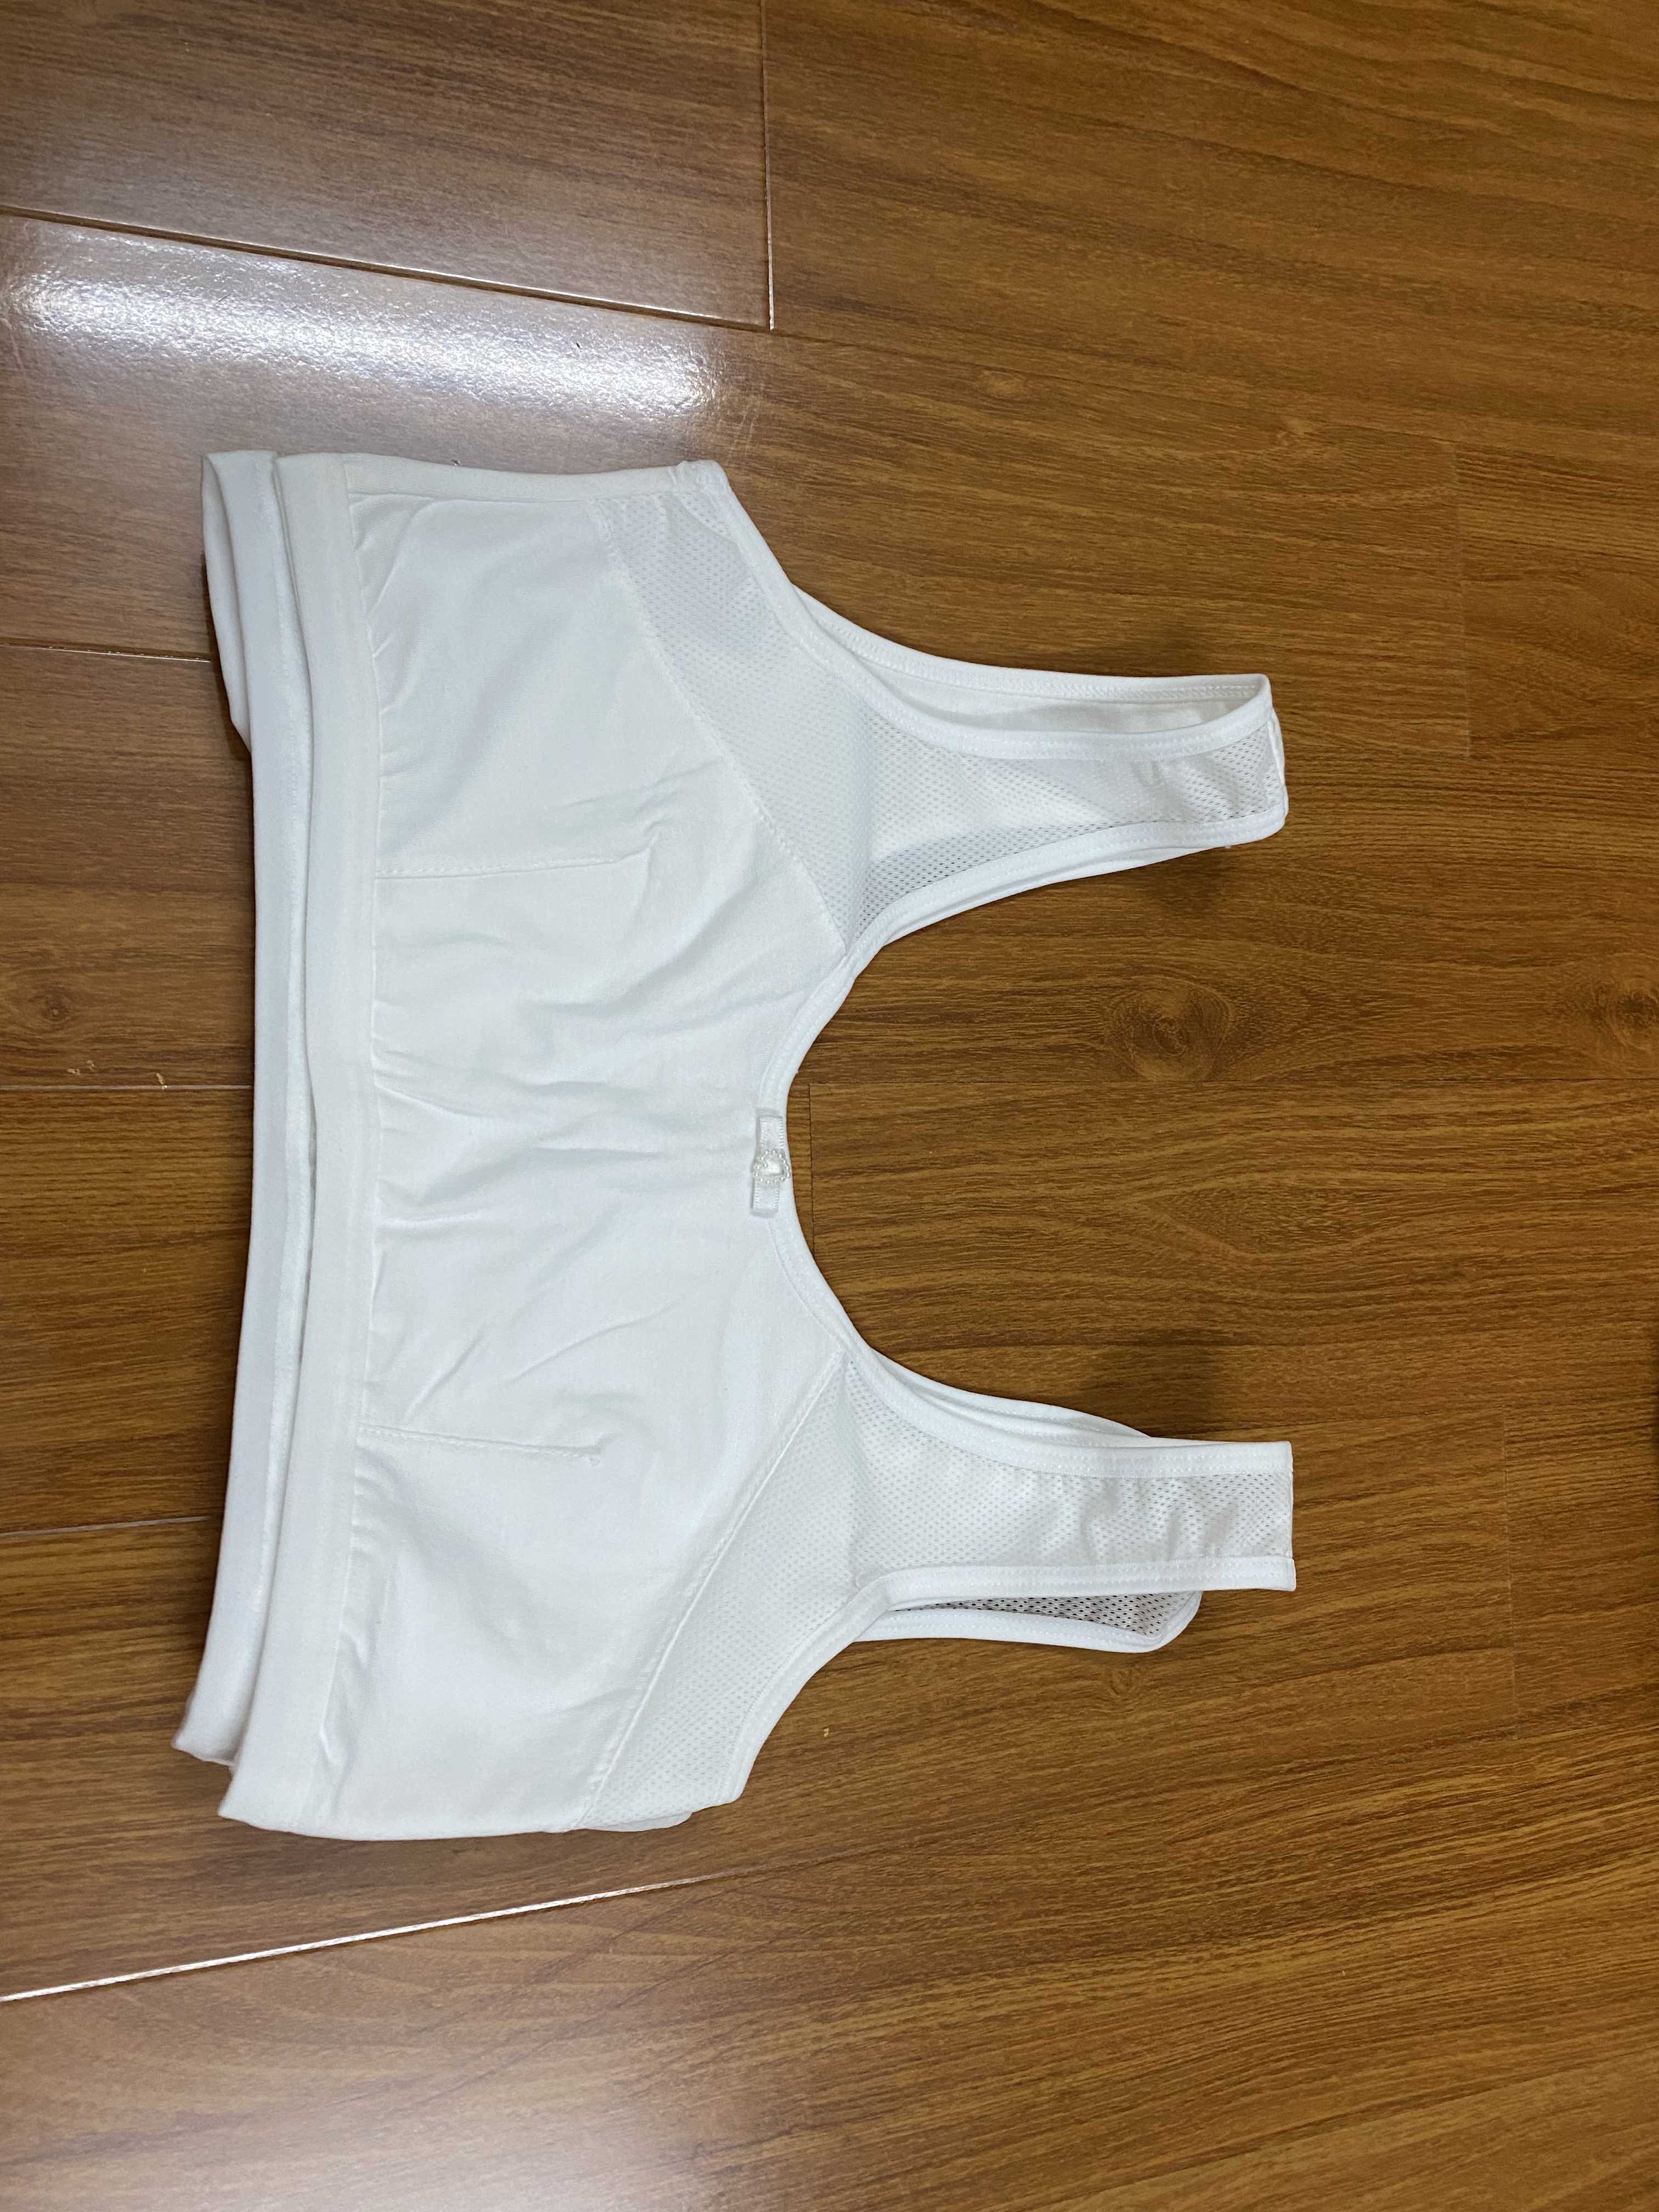 Teenage Girls Bra Cotton Kids Underwear Bra Gilrs Safety Vest Panties Set